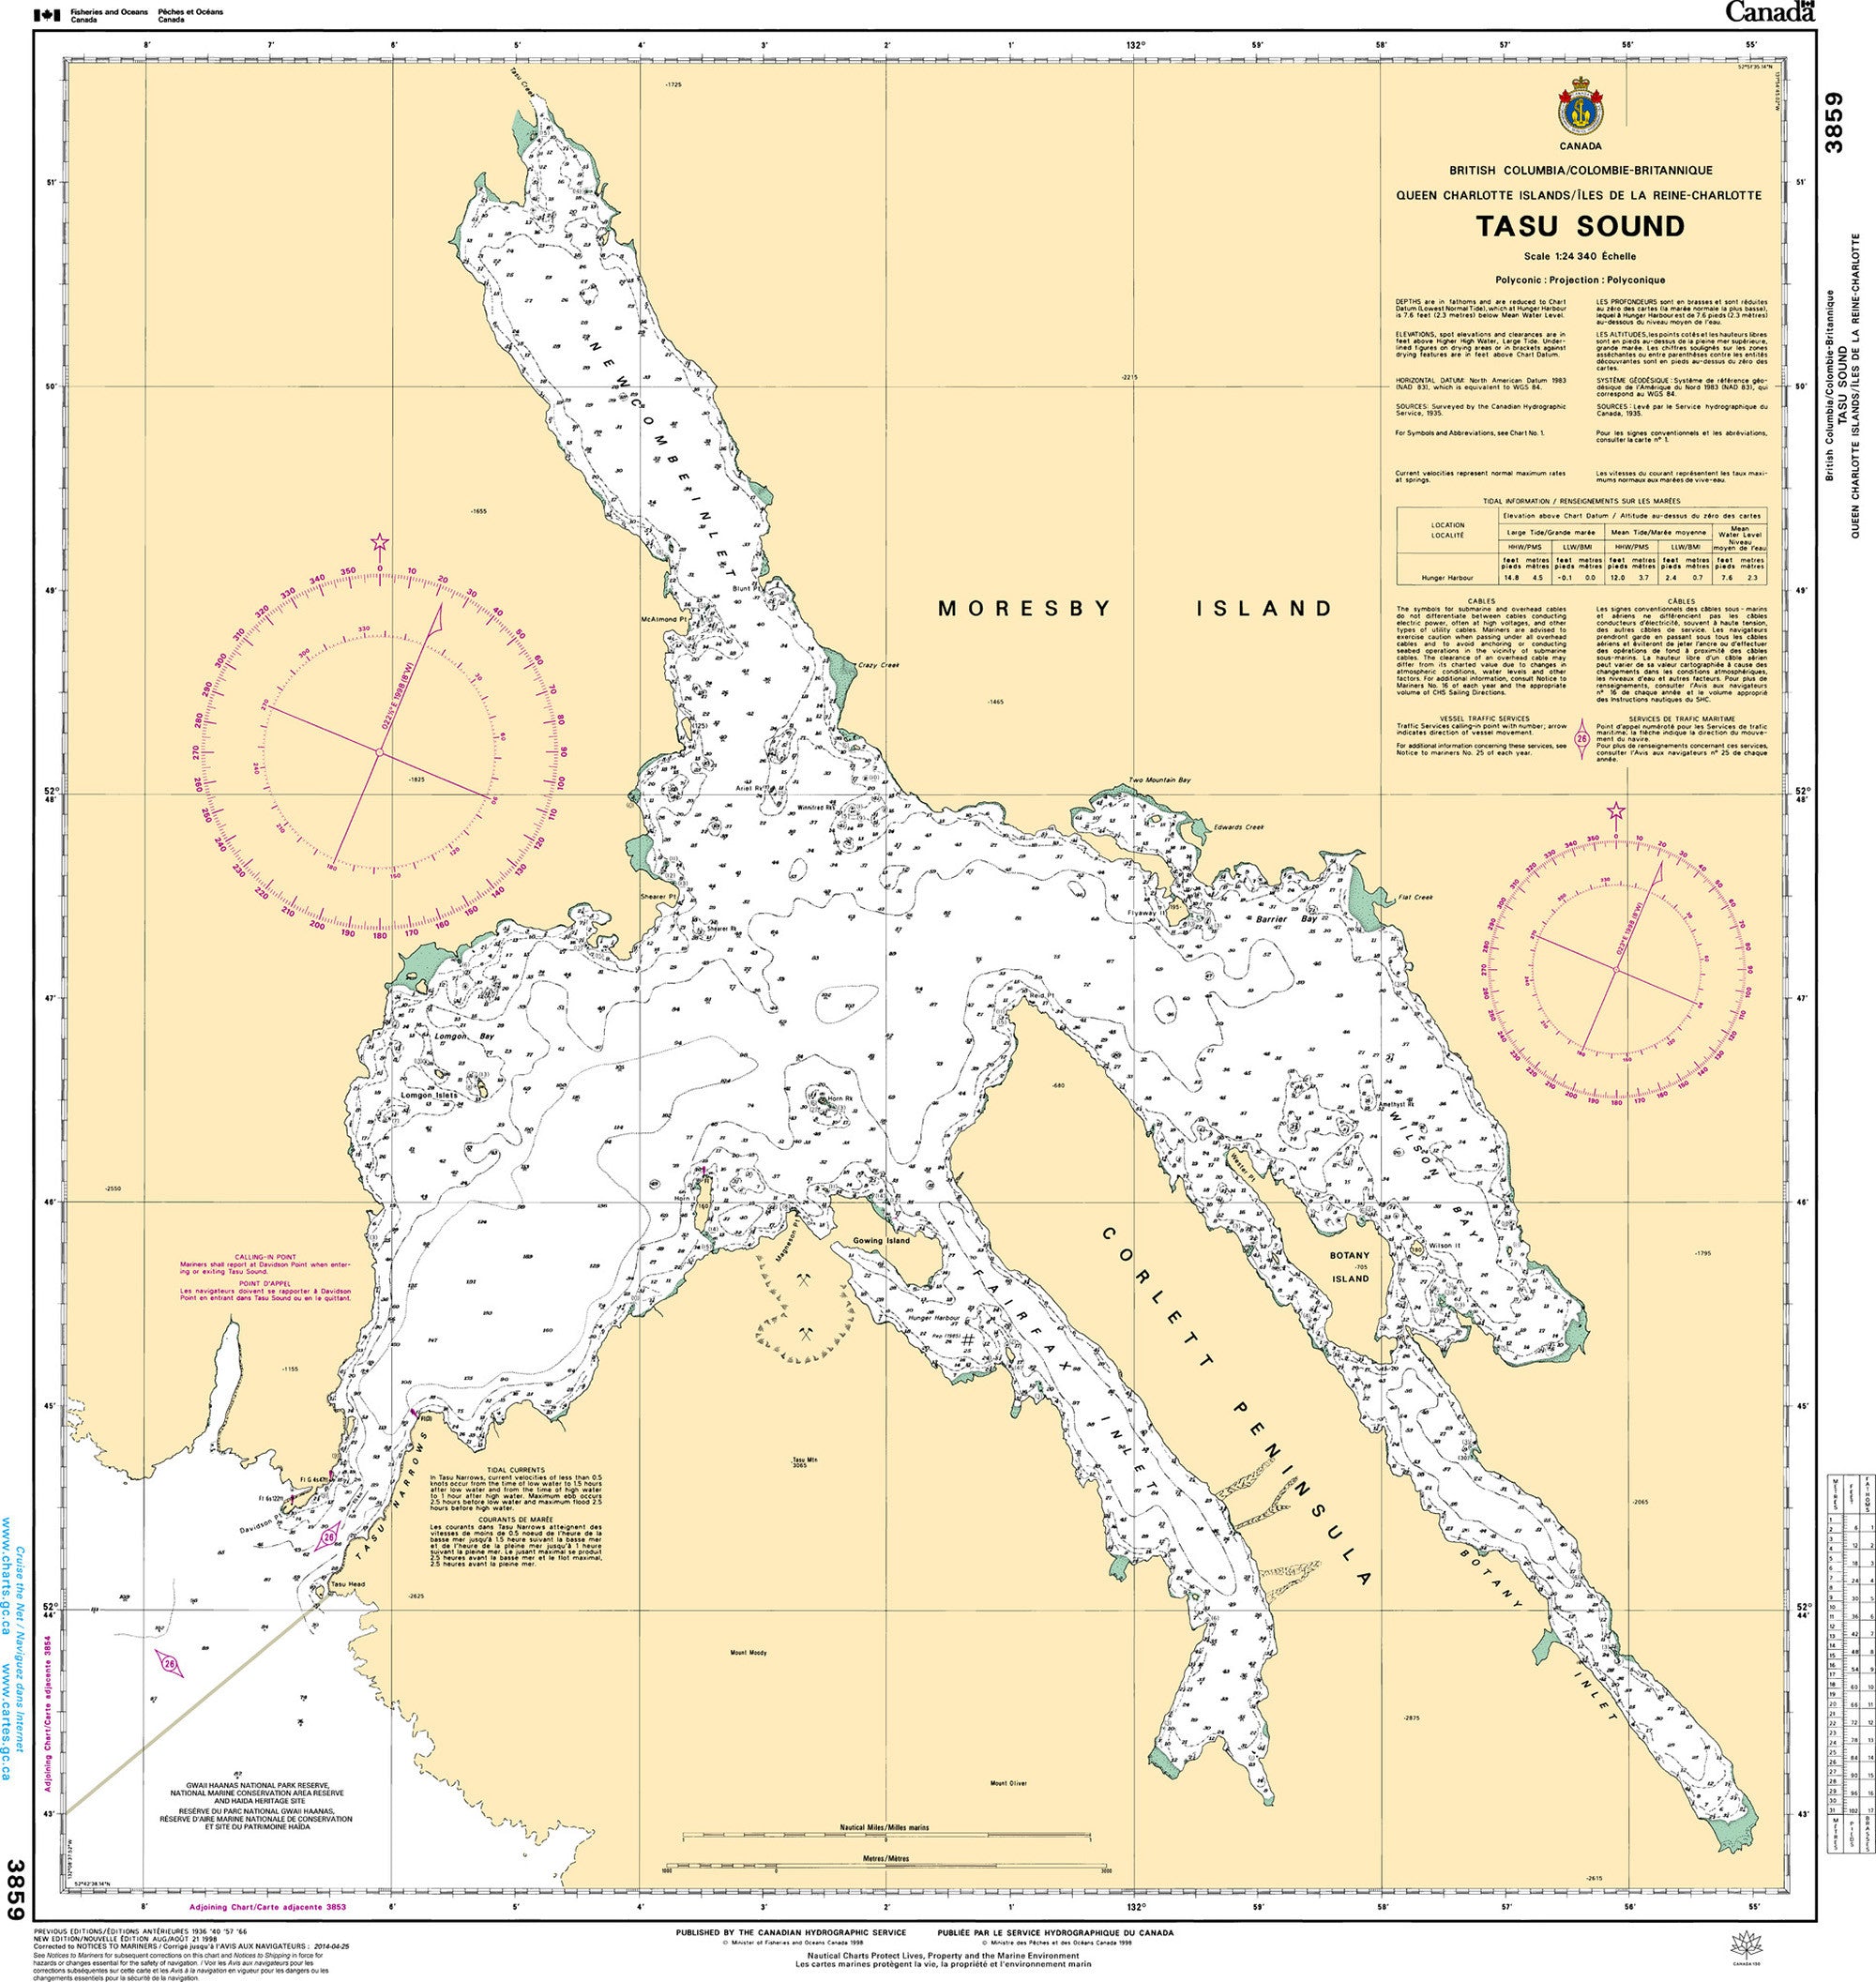 Canadian Hydrographic Service Nautical Chart CHS3859: Tasu Sound